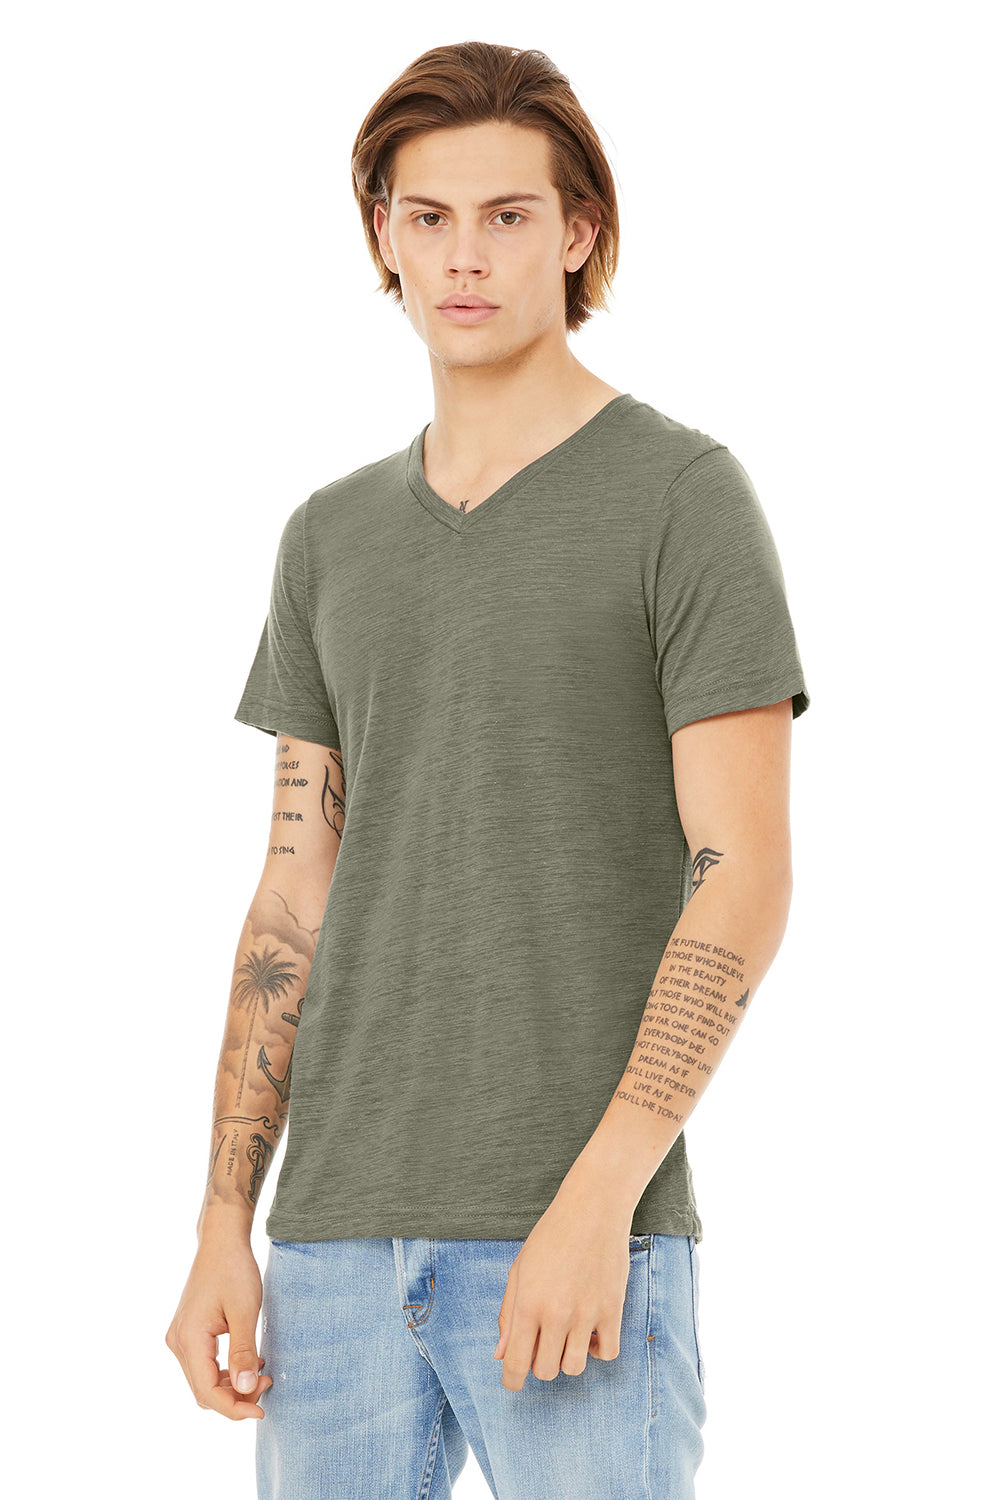 Bella + Canvas BC3005/3005/3655C Mens Jersey Short Sleeve V-Neck T-Shirt Olive Green Slub Model 3Q